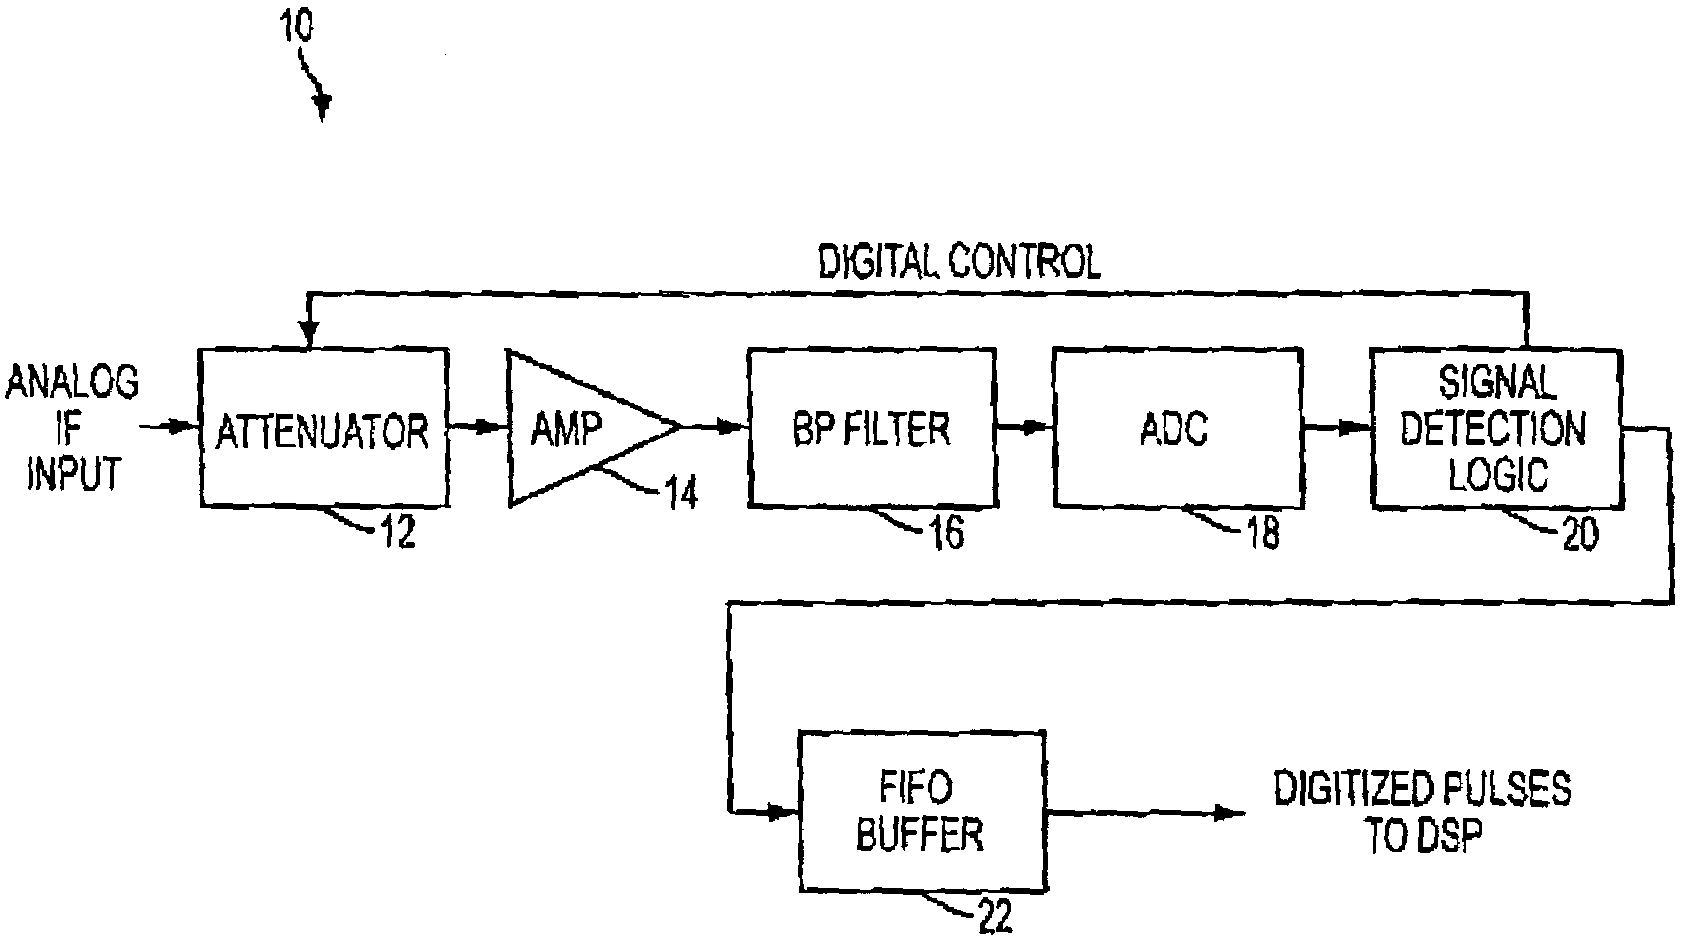 Automatic gain control for digitized RF signal processing